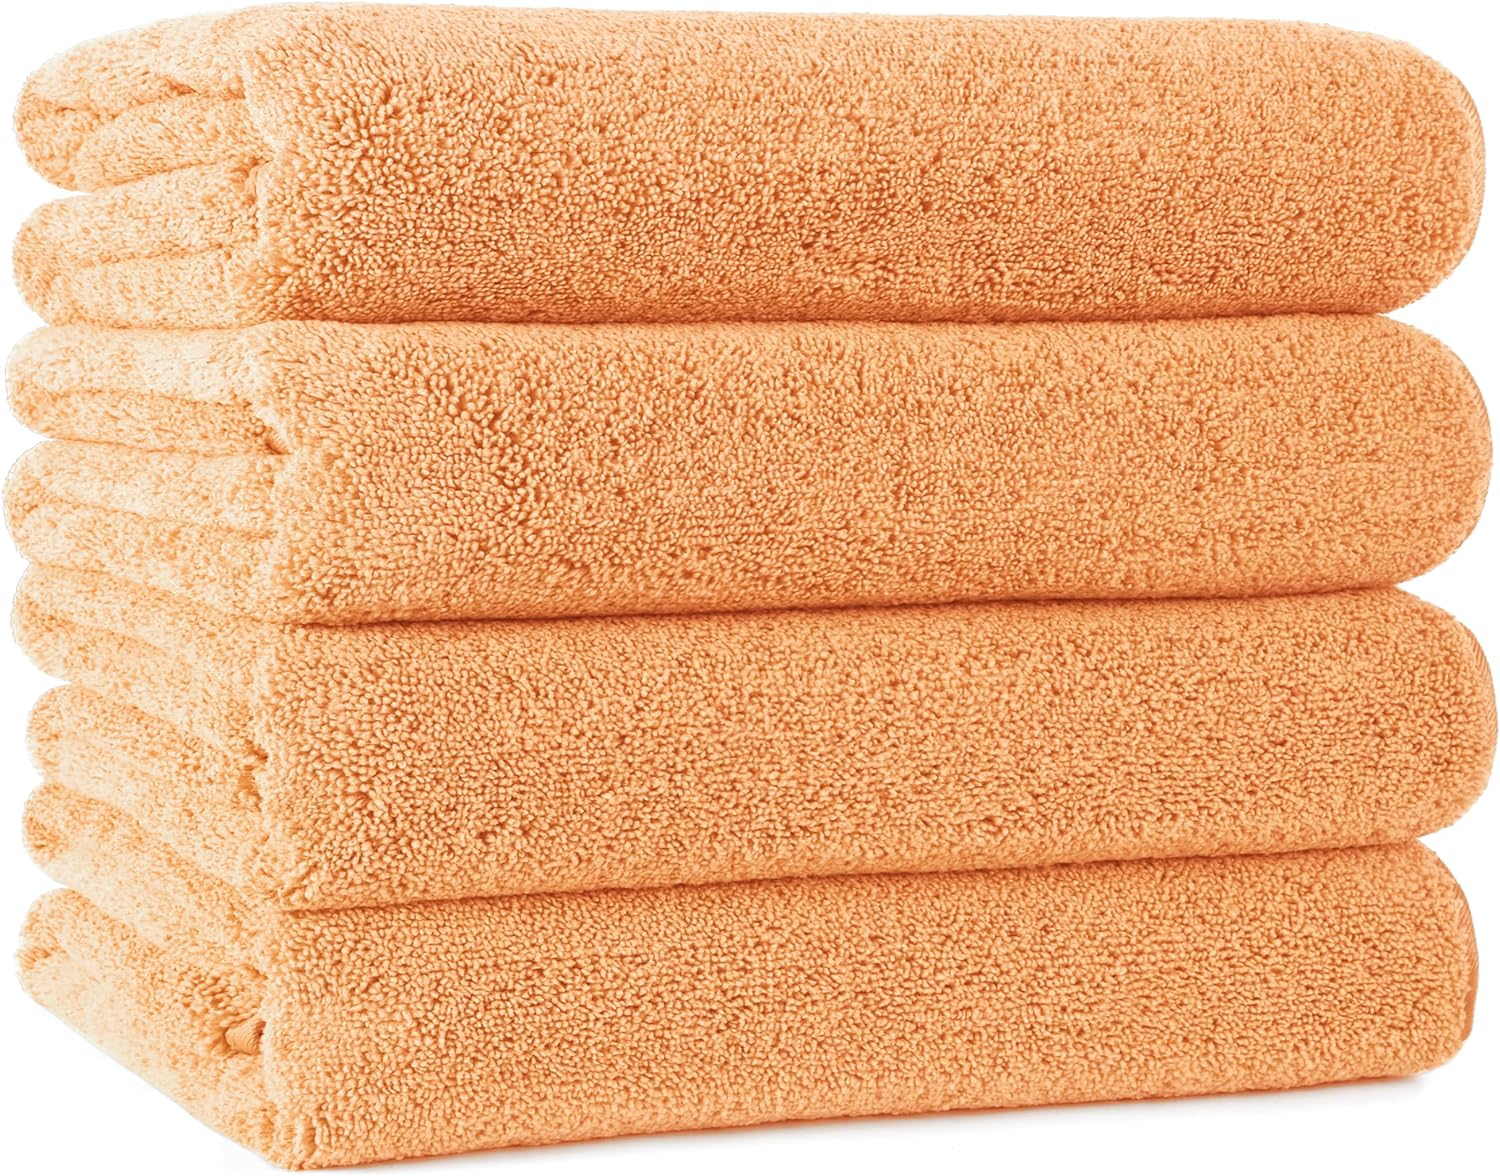 Polyte Premium Quick Dry Microfiber Bath Towel, 57 x 30 in, Set of 4